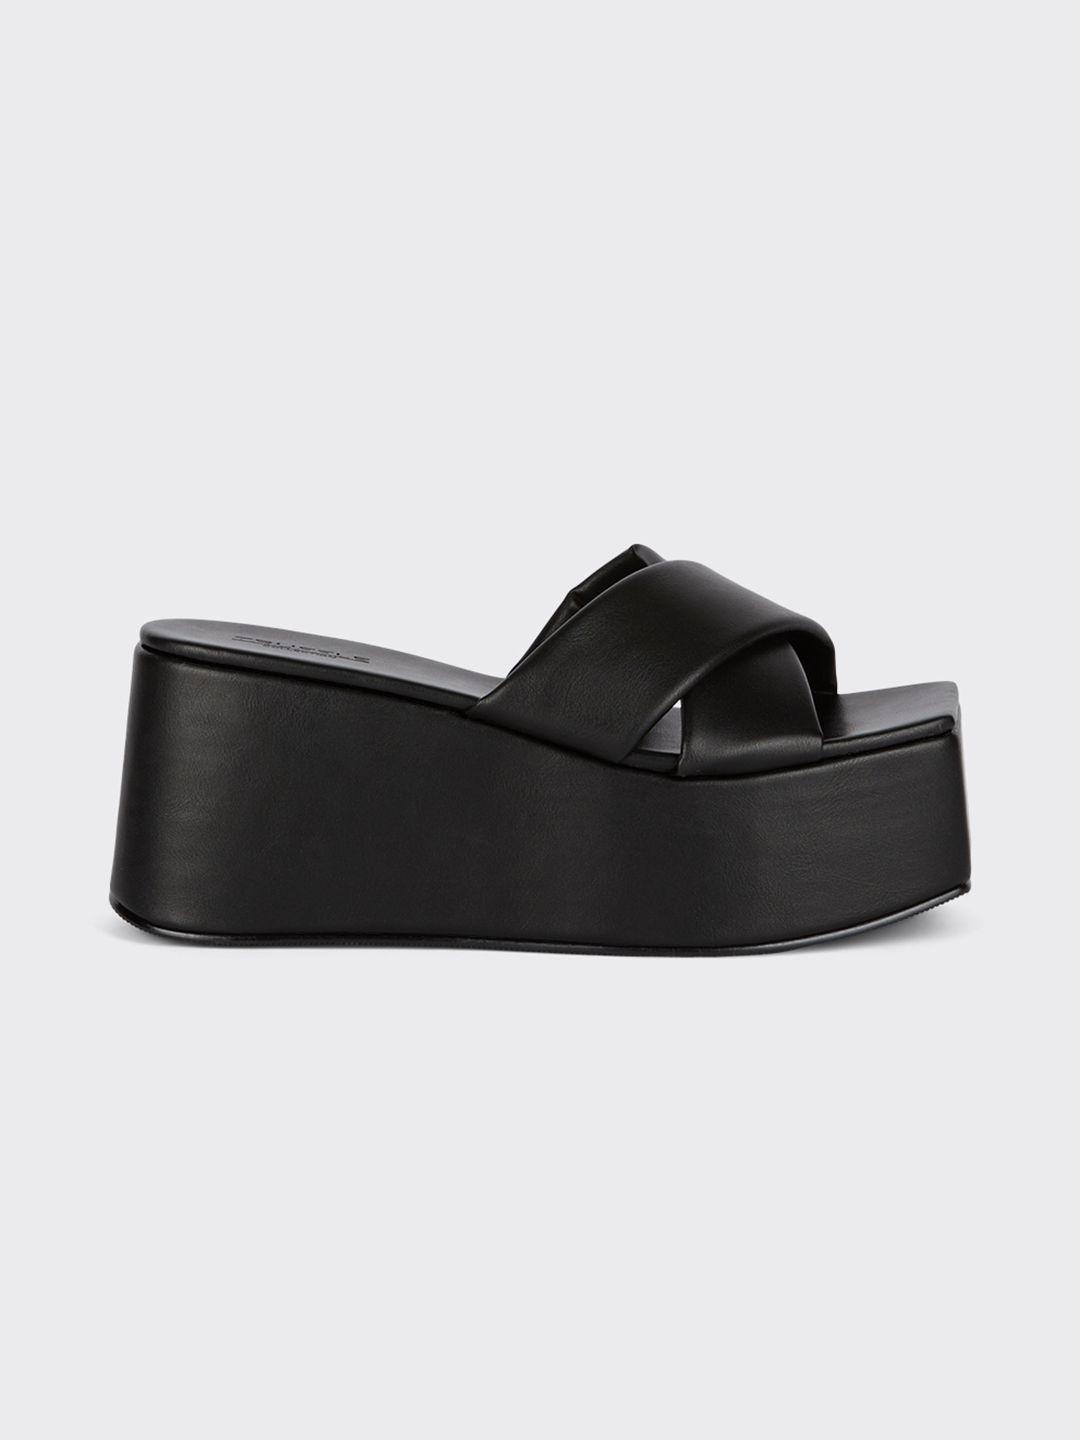 dorothy perkins black cross strap flatform heel sandals